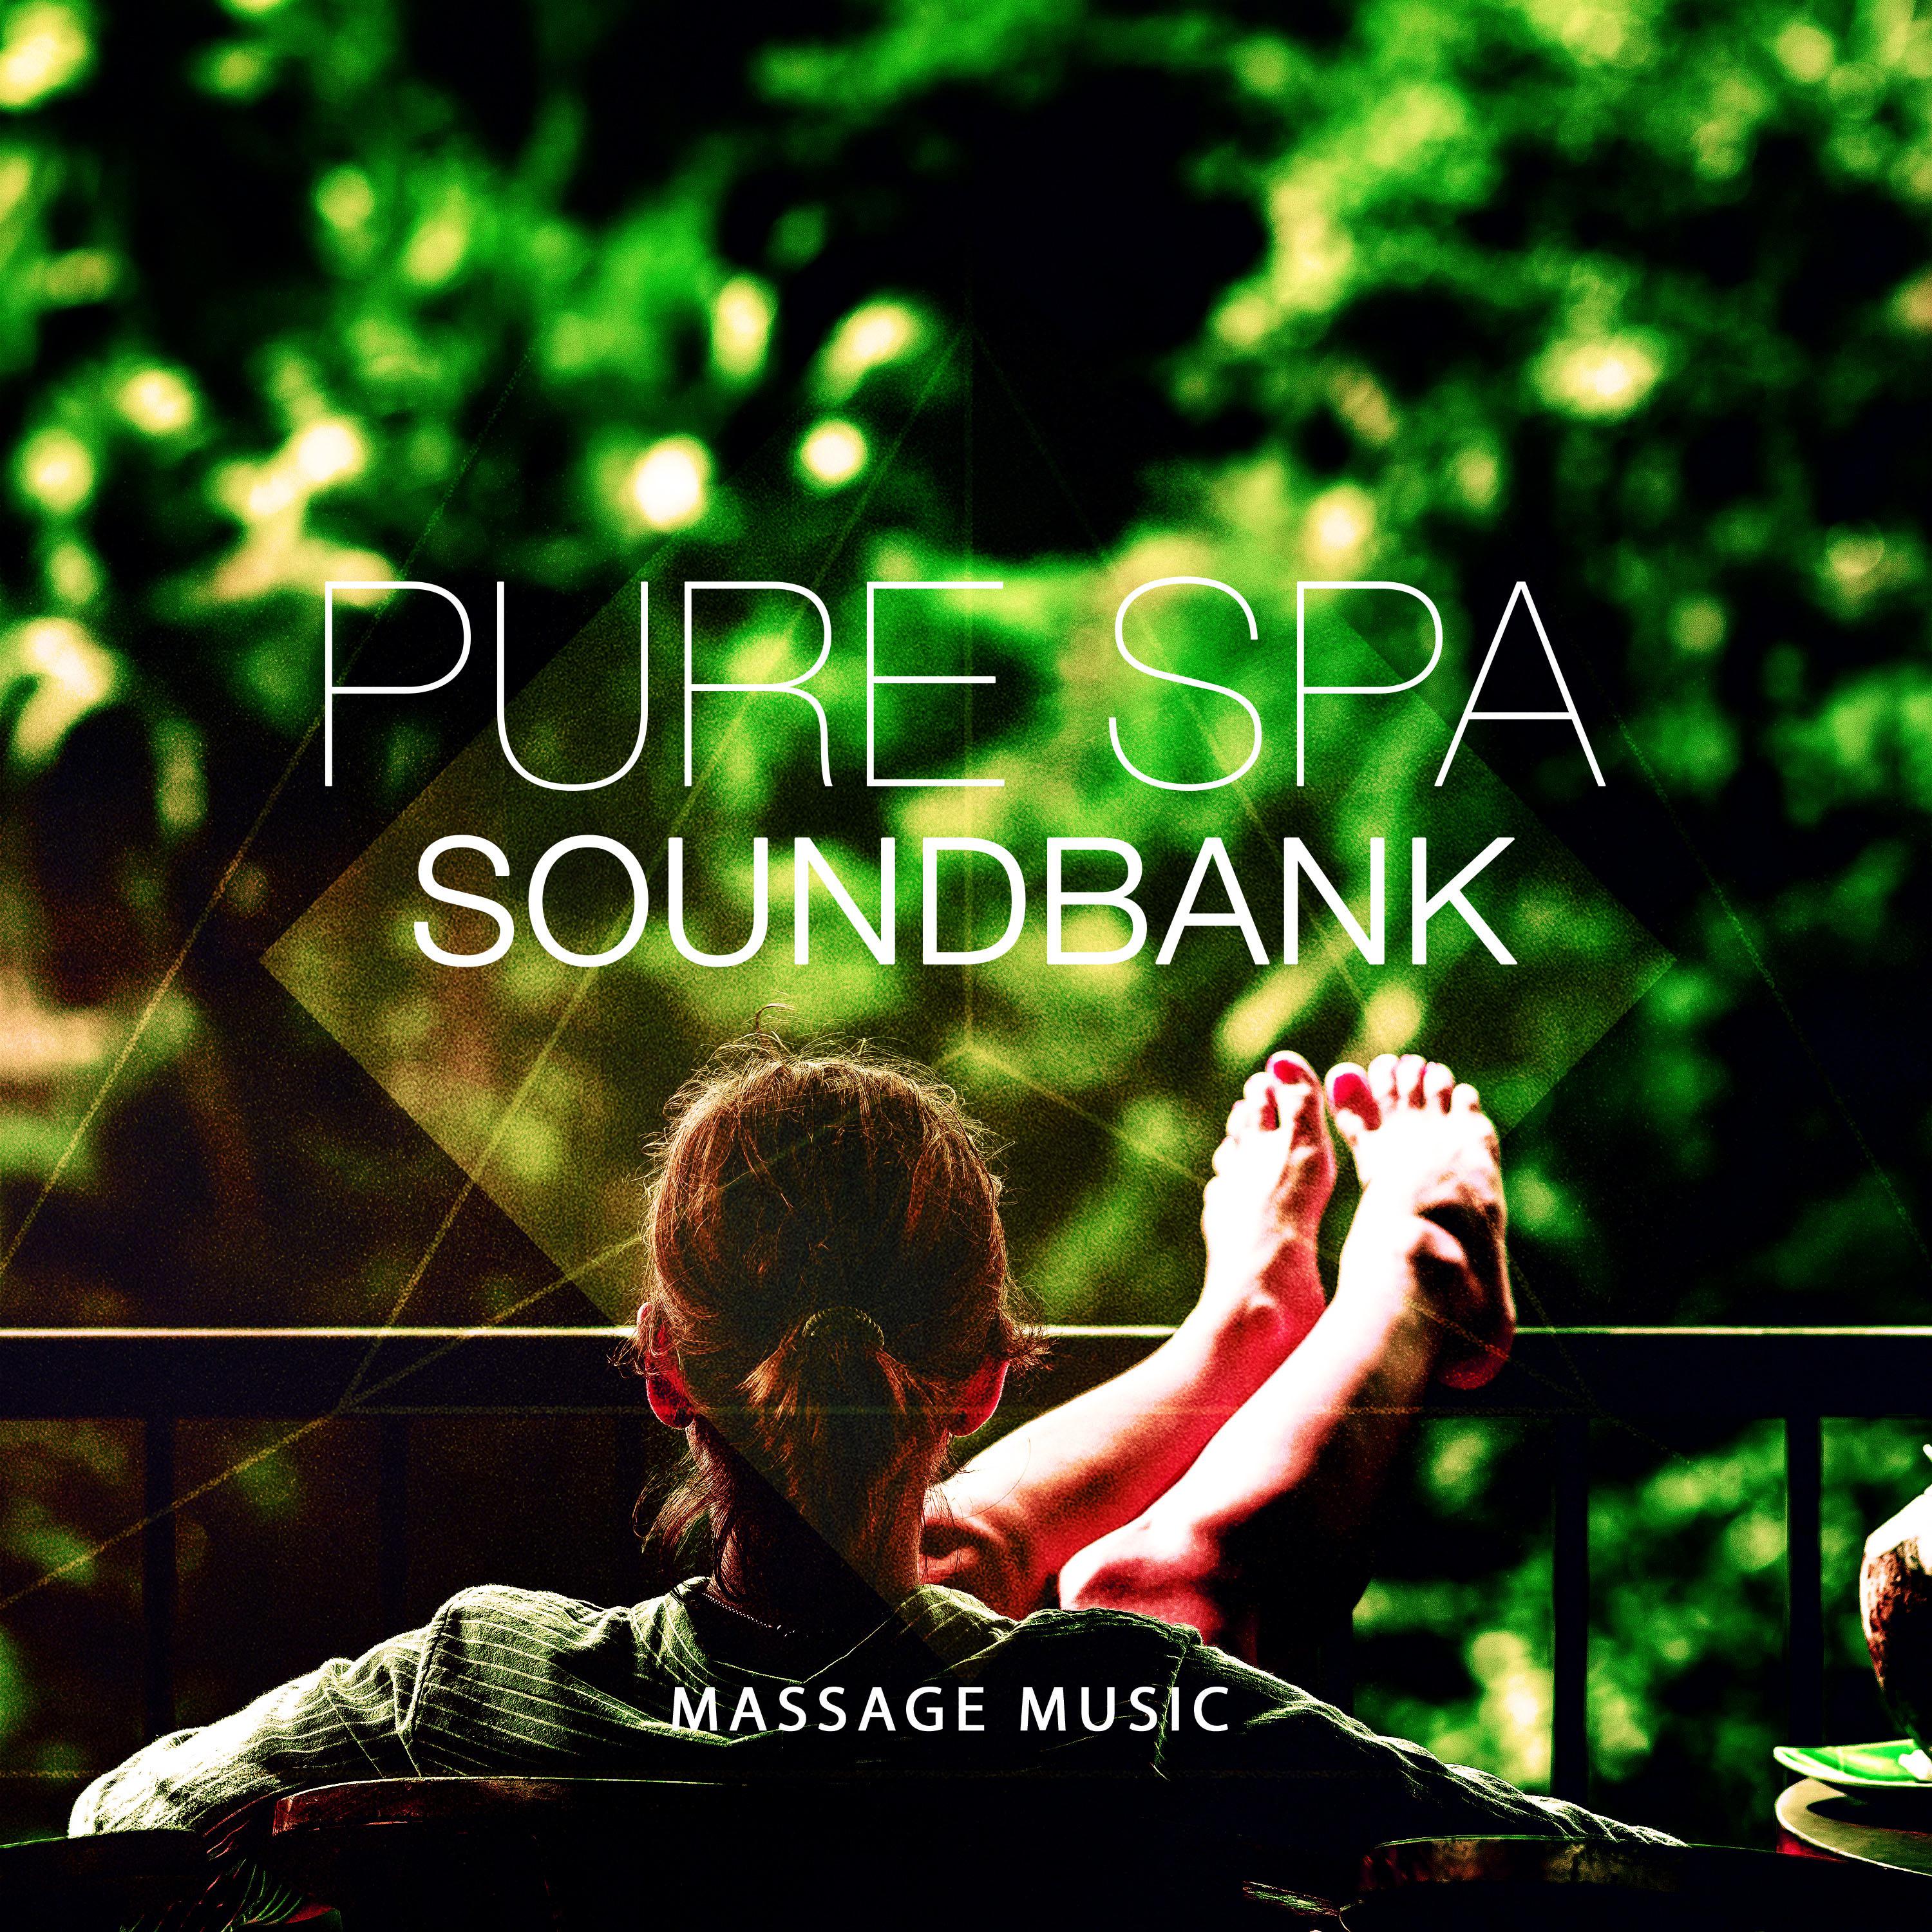 Pure Spa Soundbank